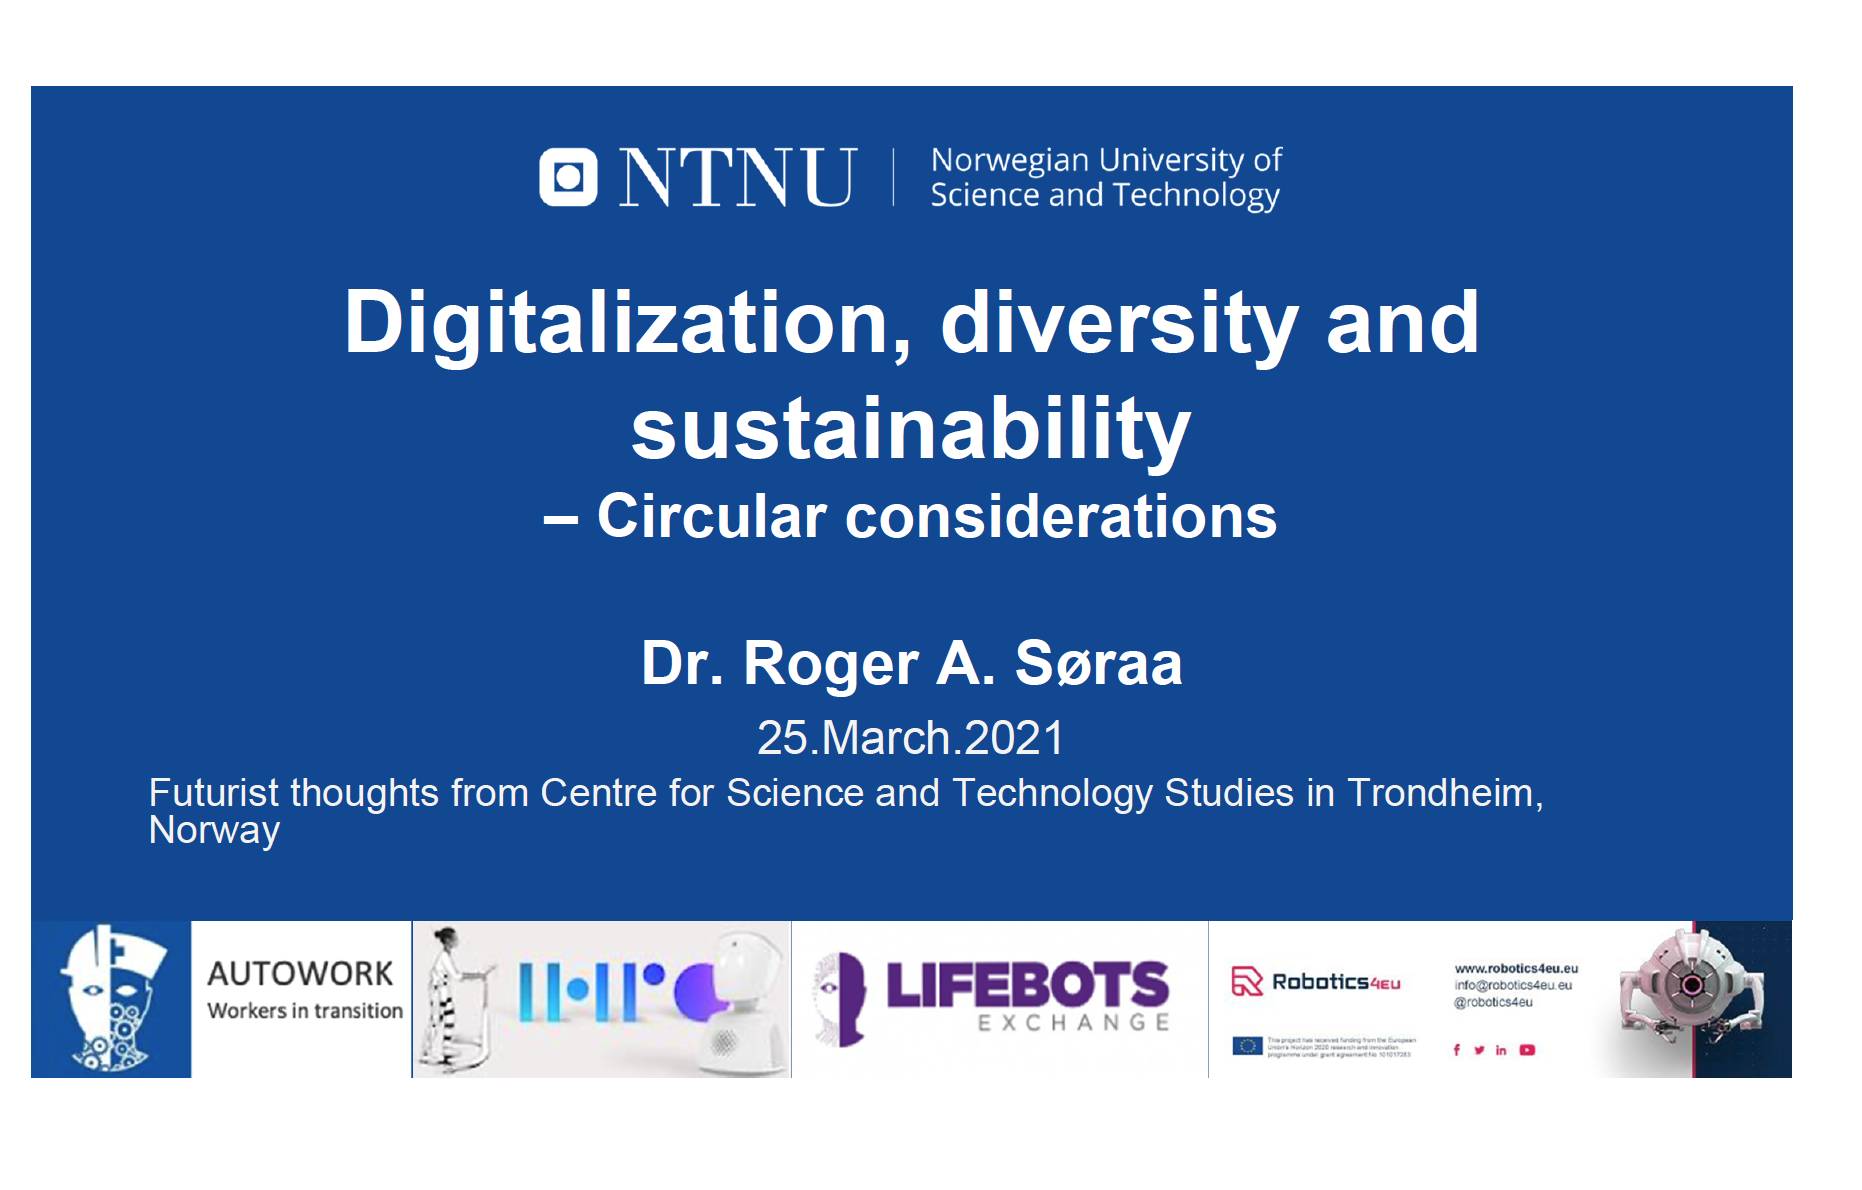 Digitalization, Diversity and Sustainability